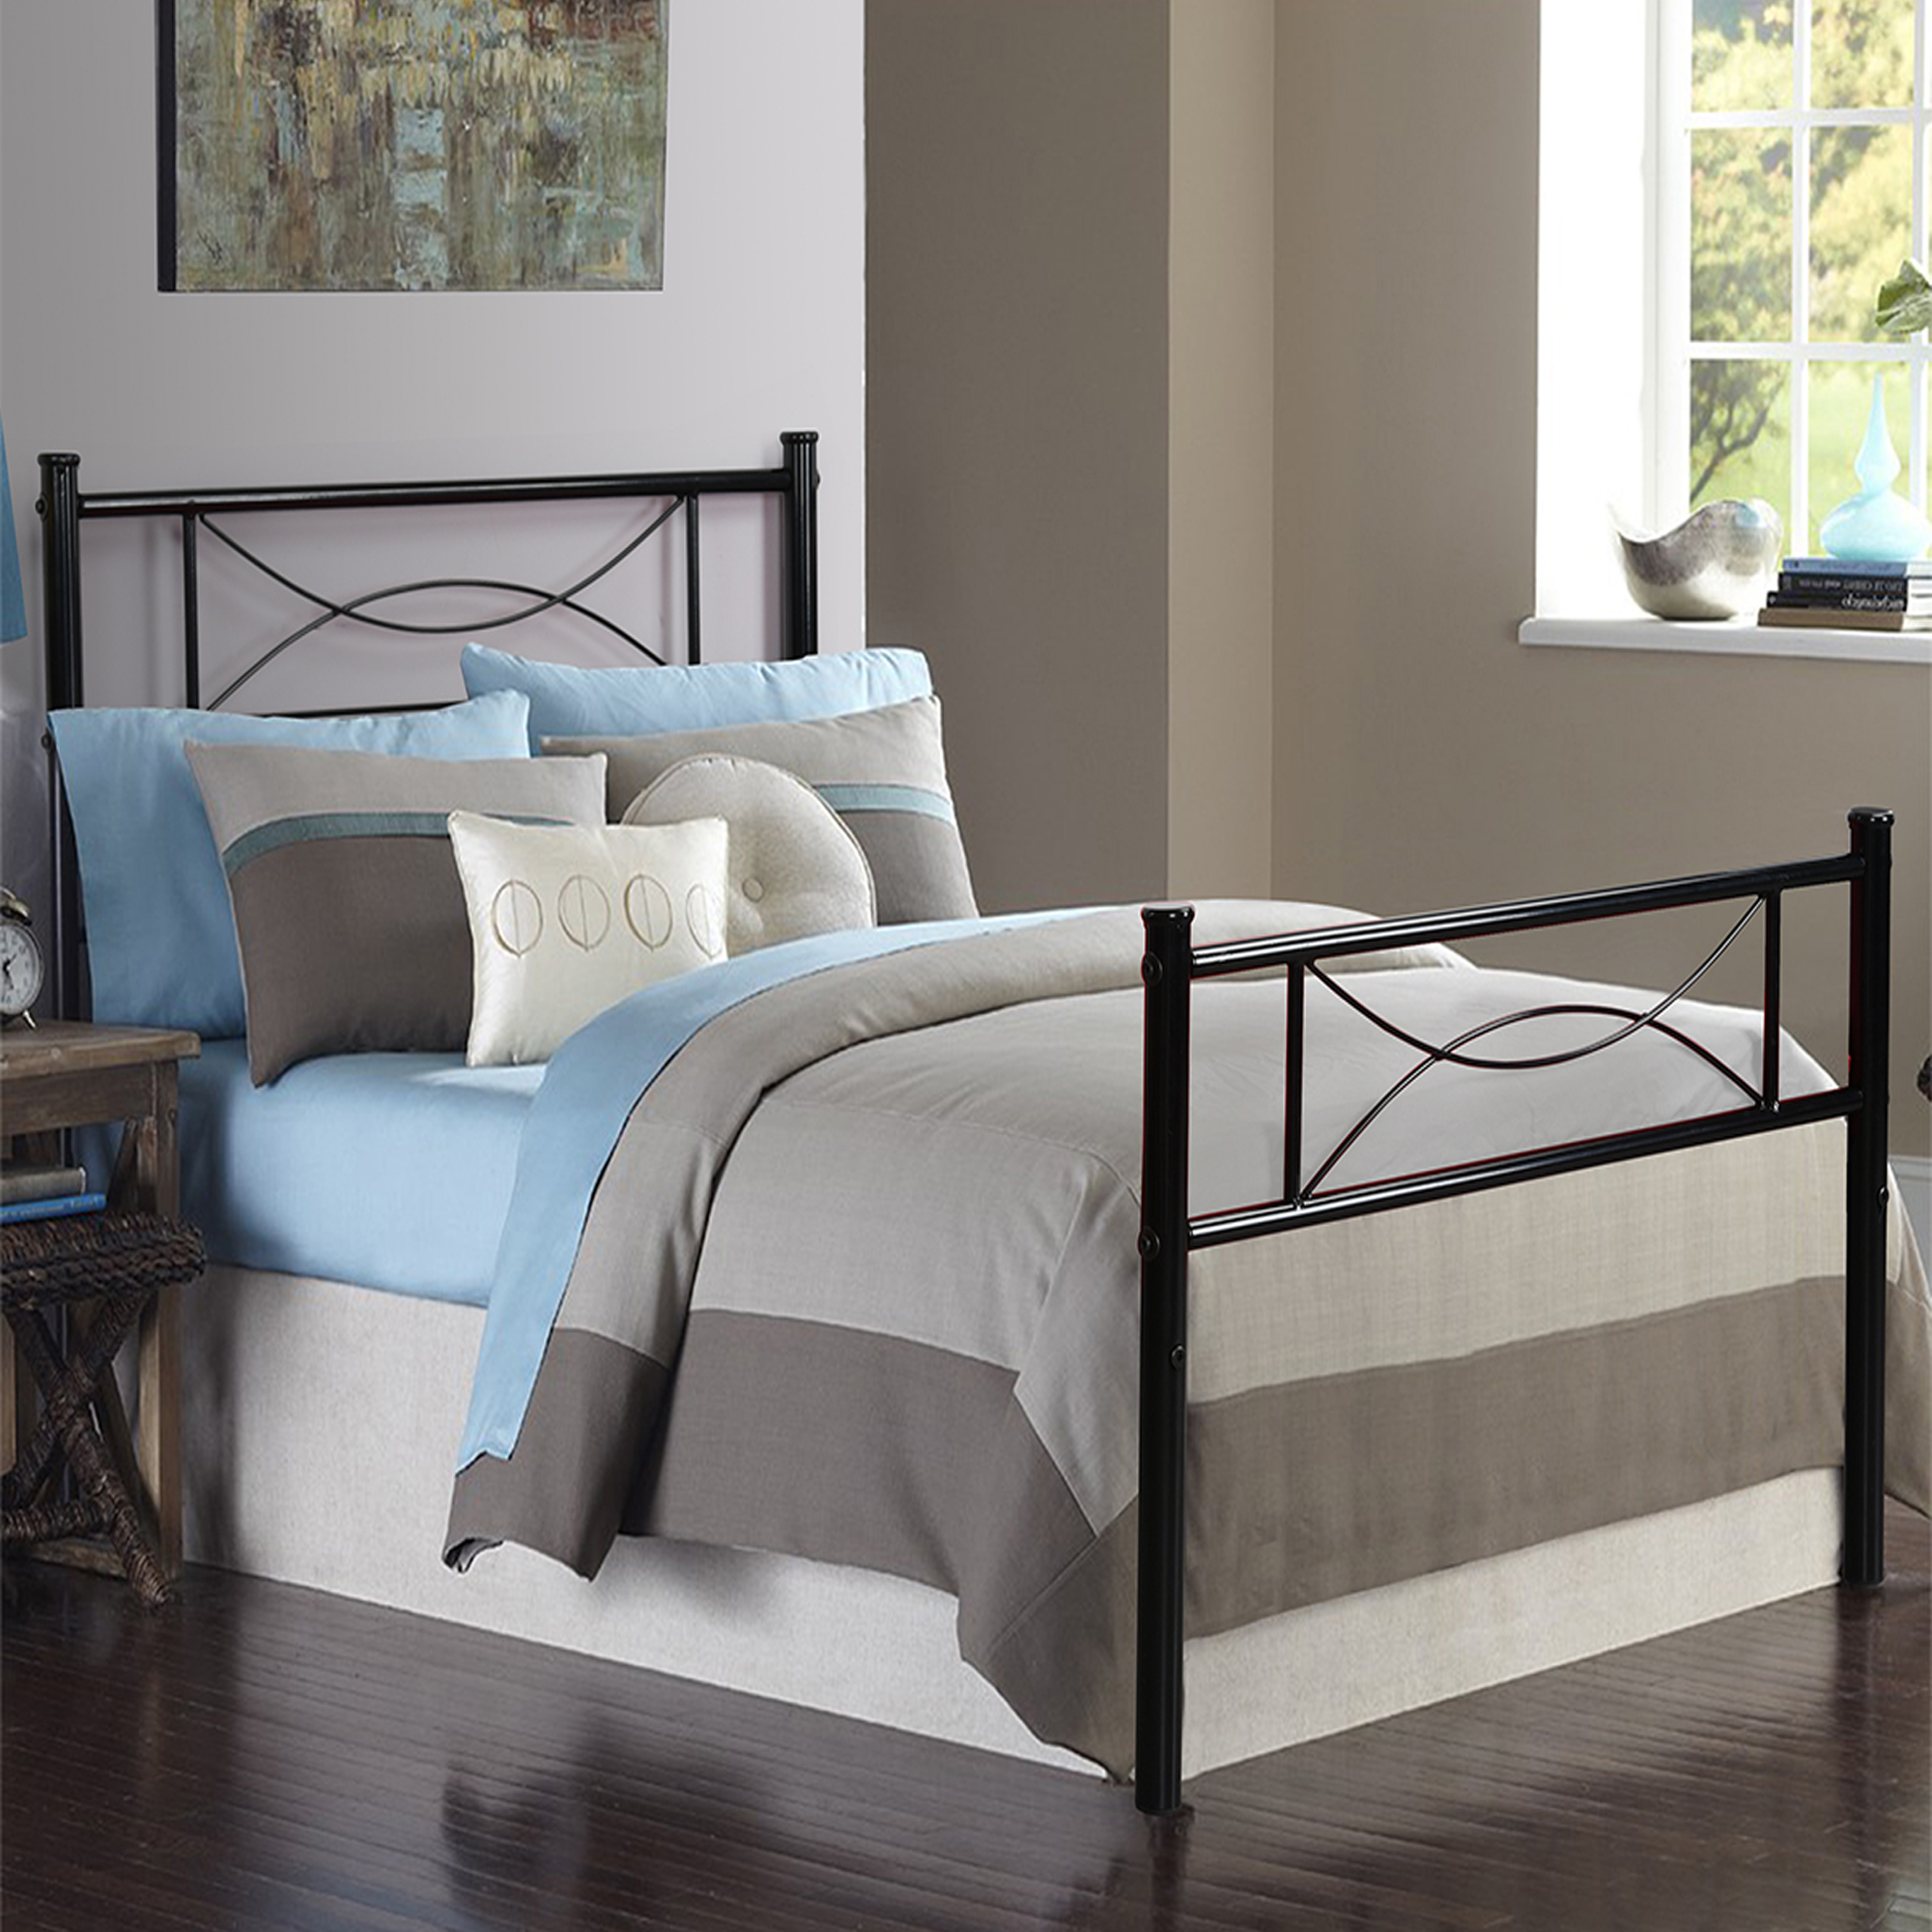 Furniture R Bedroom Metal Bed Frame, Twin Bed Mattress Foundation